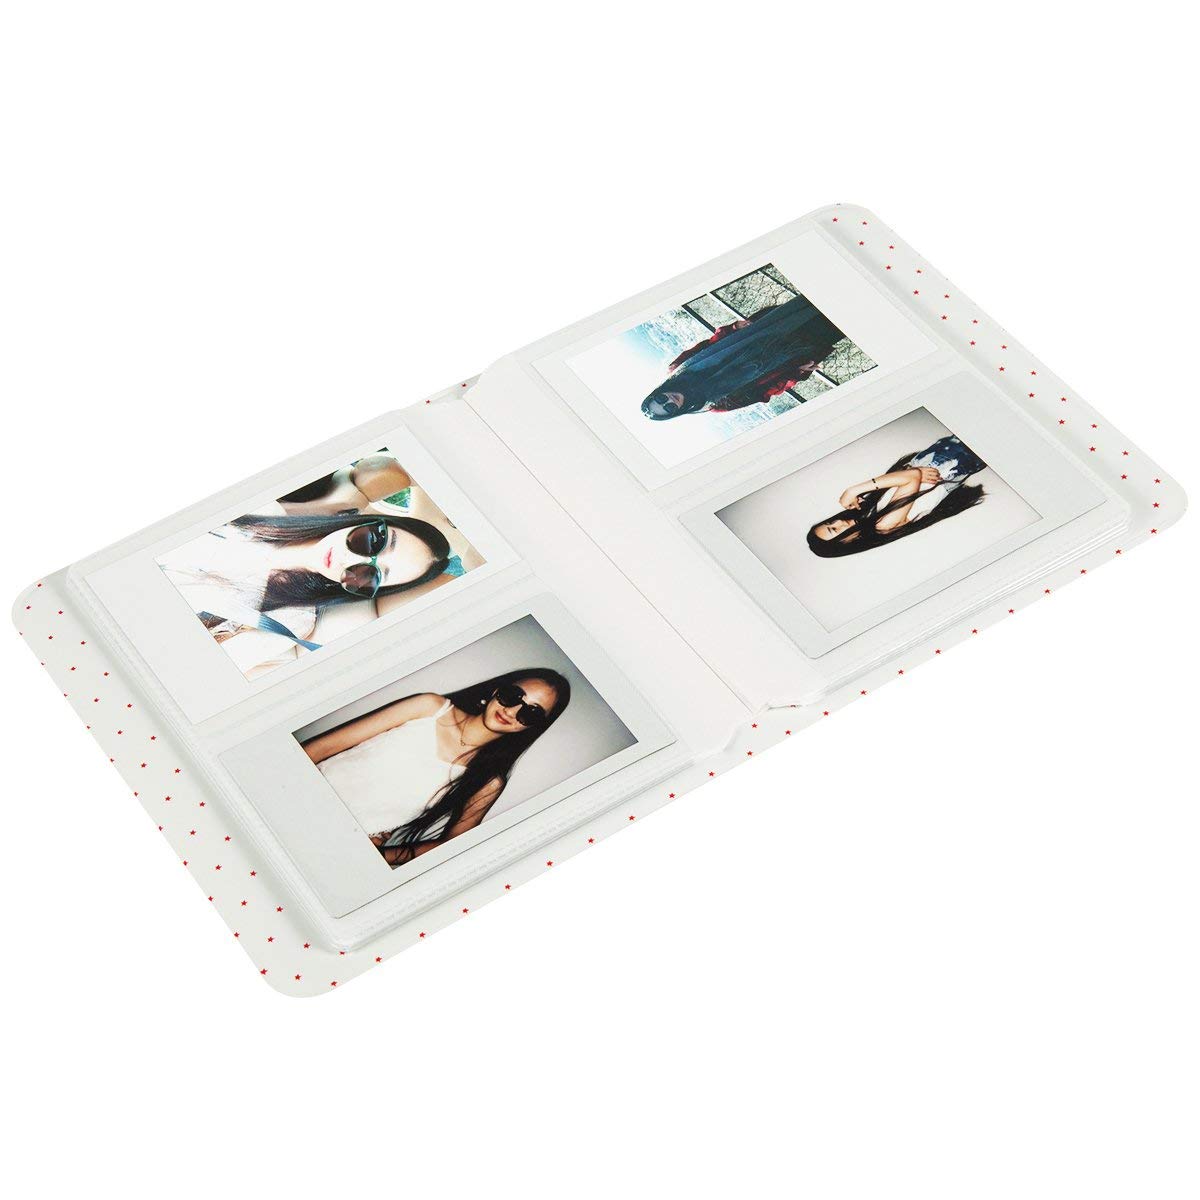 [Fuji Instax Mini 9 Photo Album] CAIUL Pieces Of Moment Book Album for Films of Instax Mini 7s 8 8+ 9 25 26 50s 70 90 (64 Photos) Ice Blue